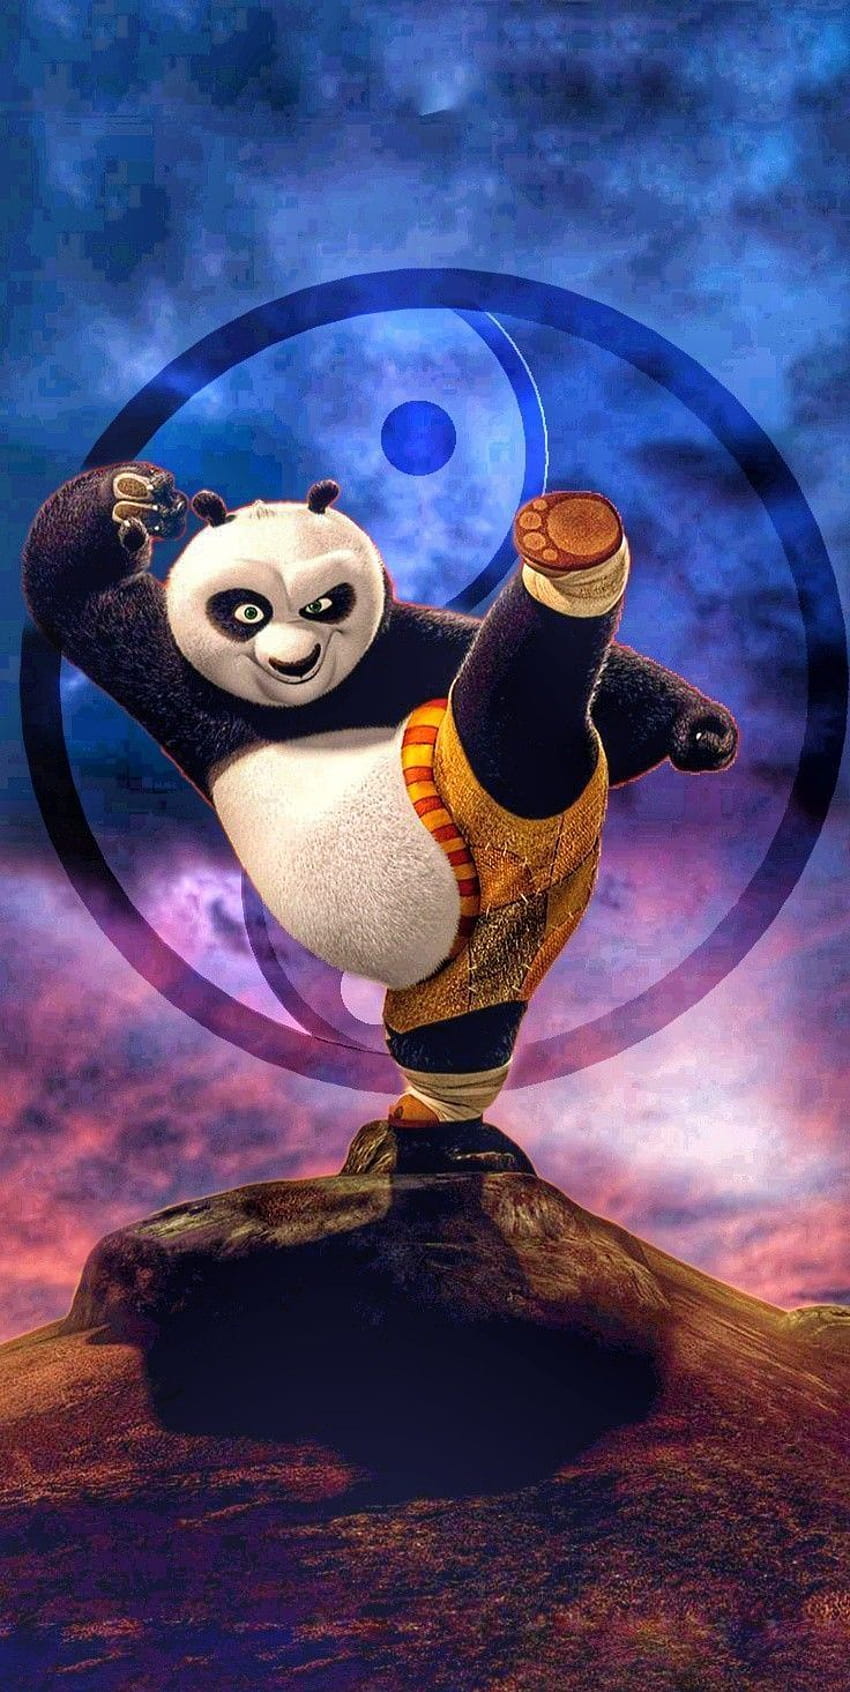 Shifu Kung Fu Panda wallpapers for desktop download free Shifu Kung Fu  Panda pictures and backgrounds for PC  moborg